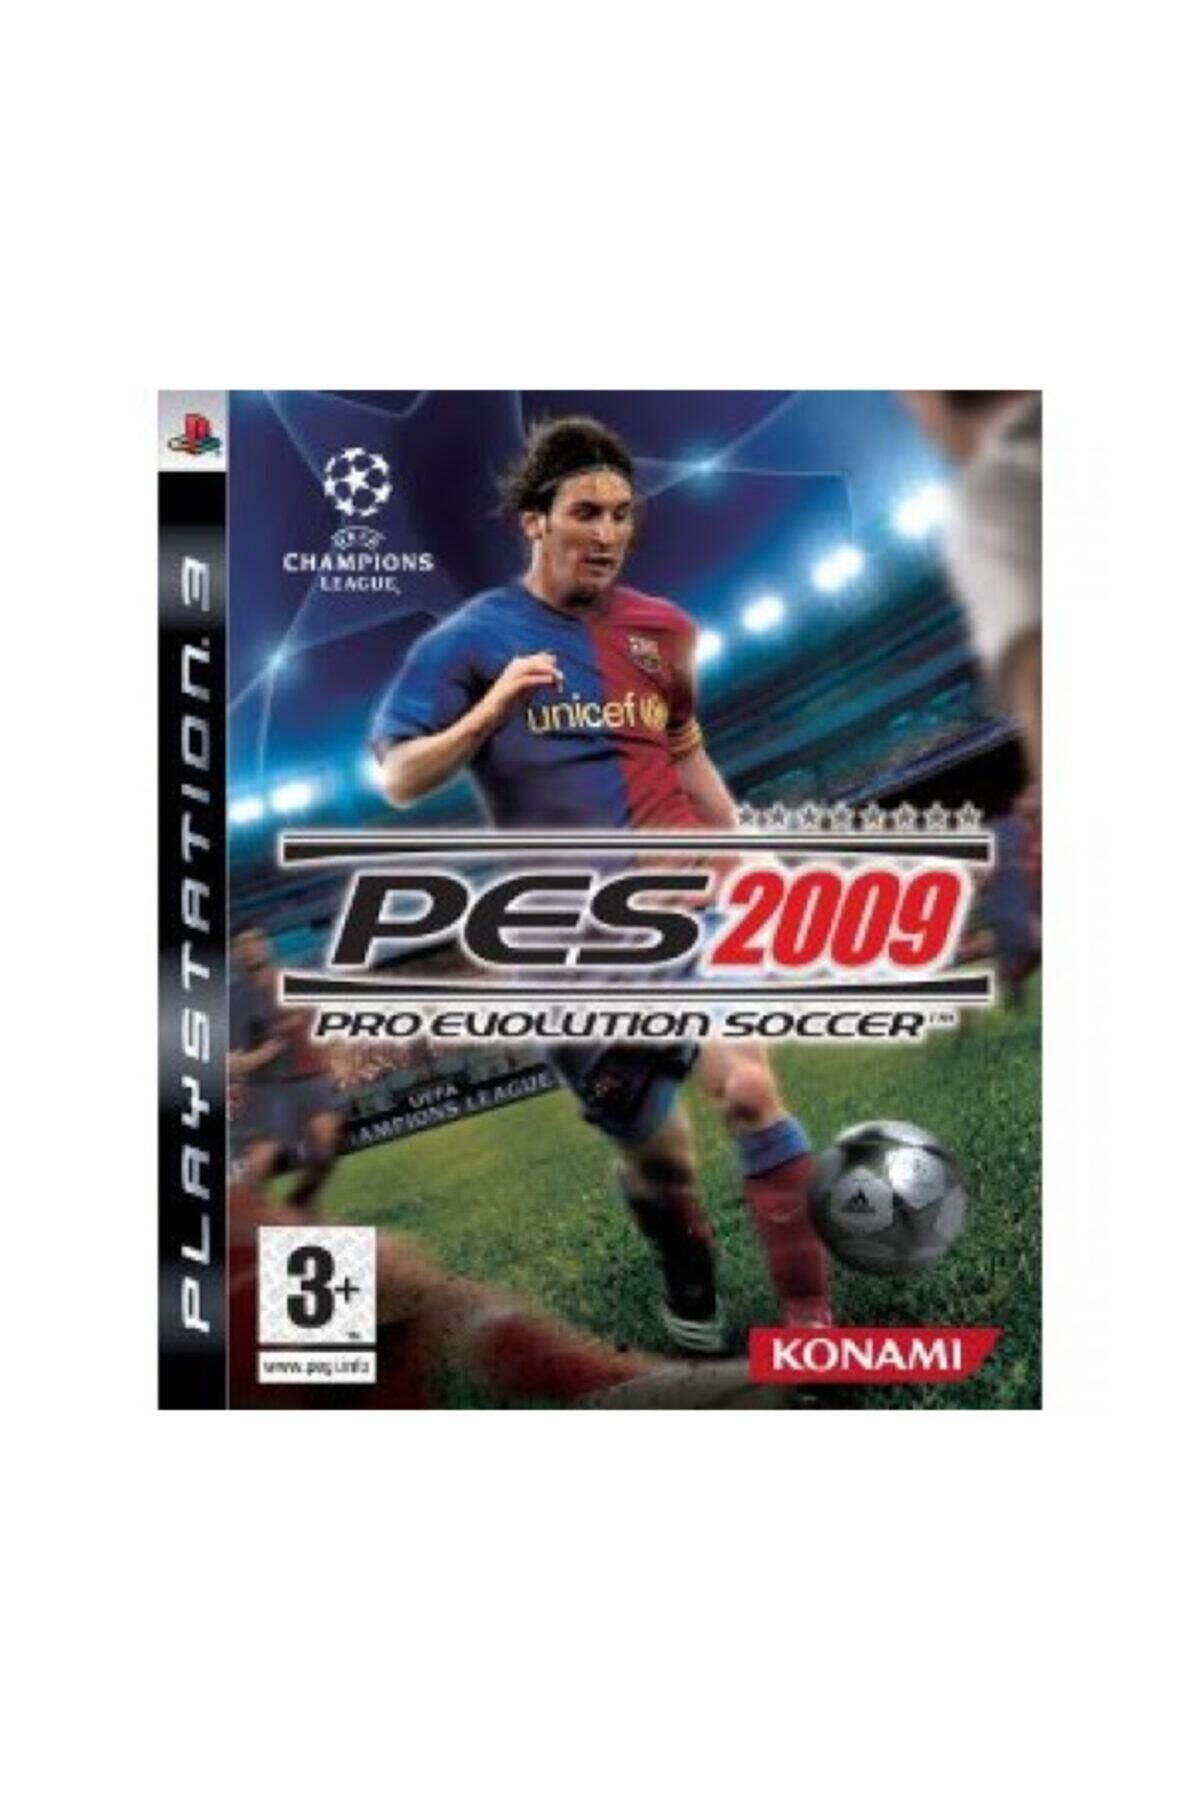 Konami Pro Evolution Soccer 2009 - Pes 2009 Ps3